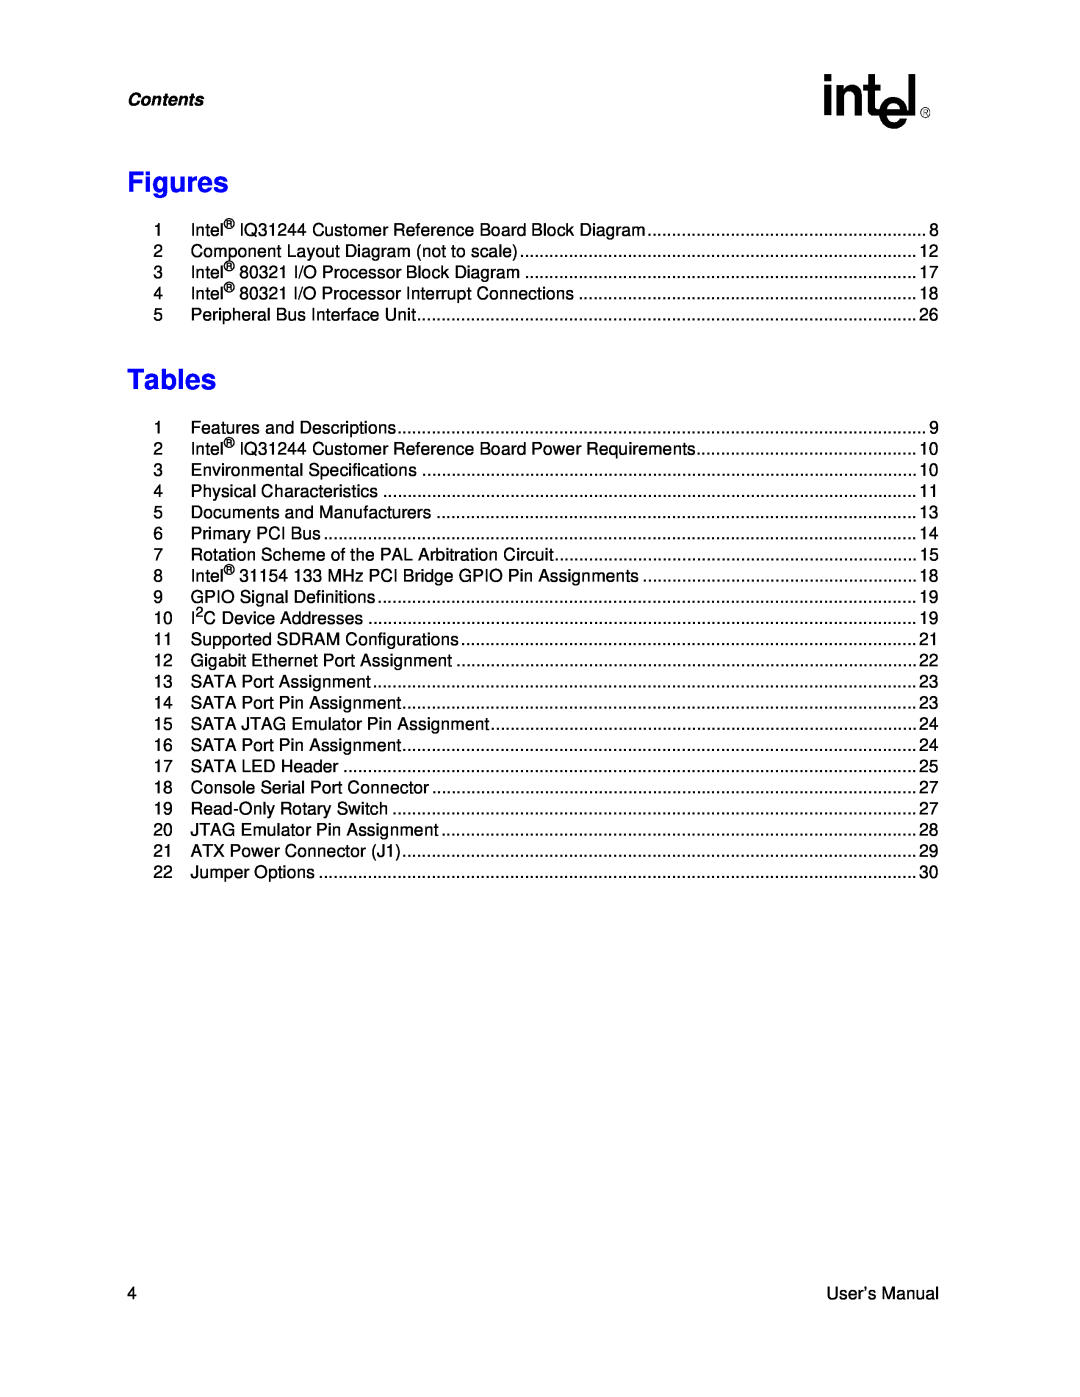 Intel IQ31244 user manual Figures, Tables, Contents 